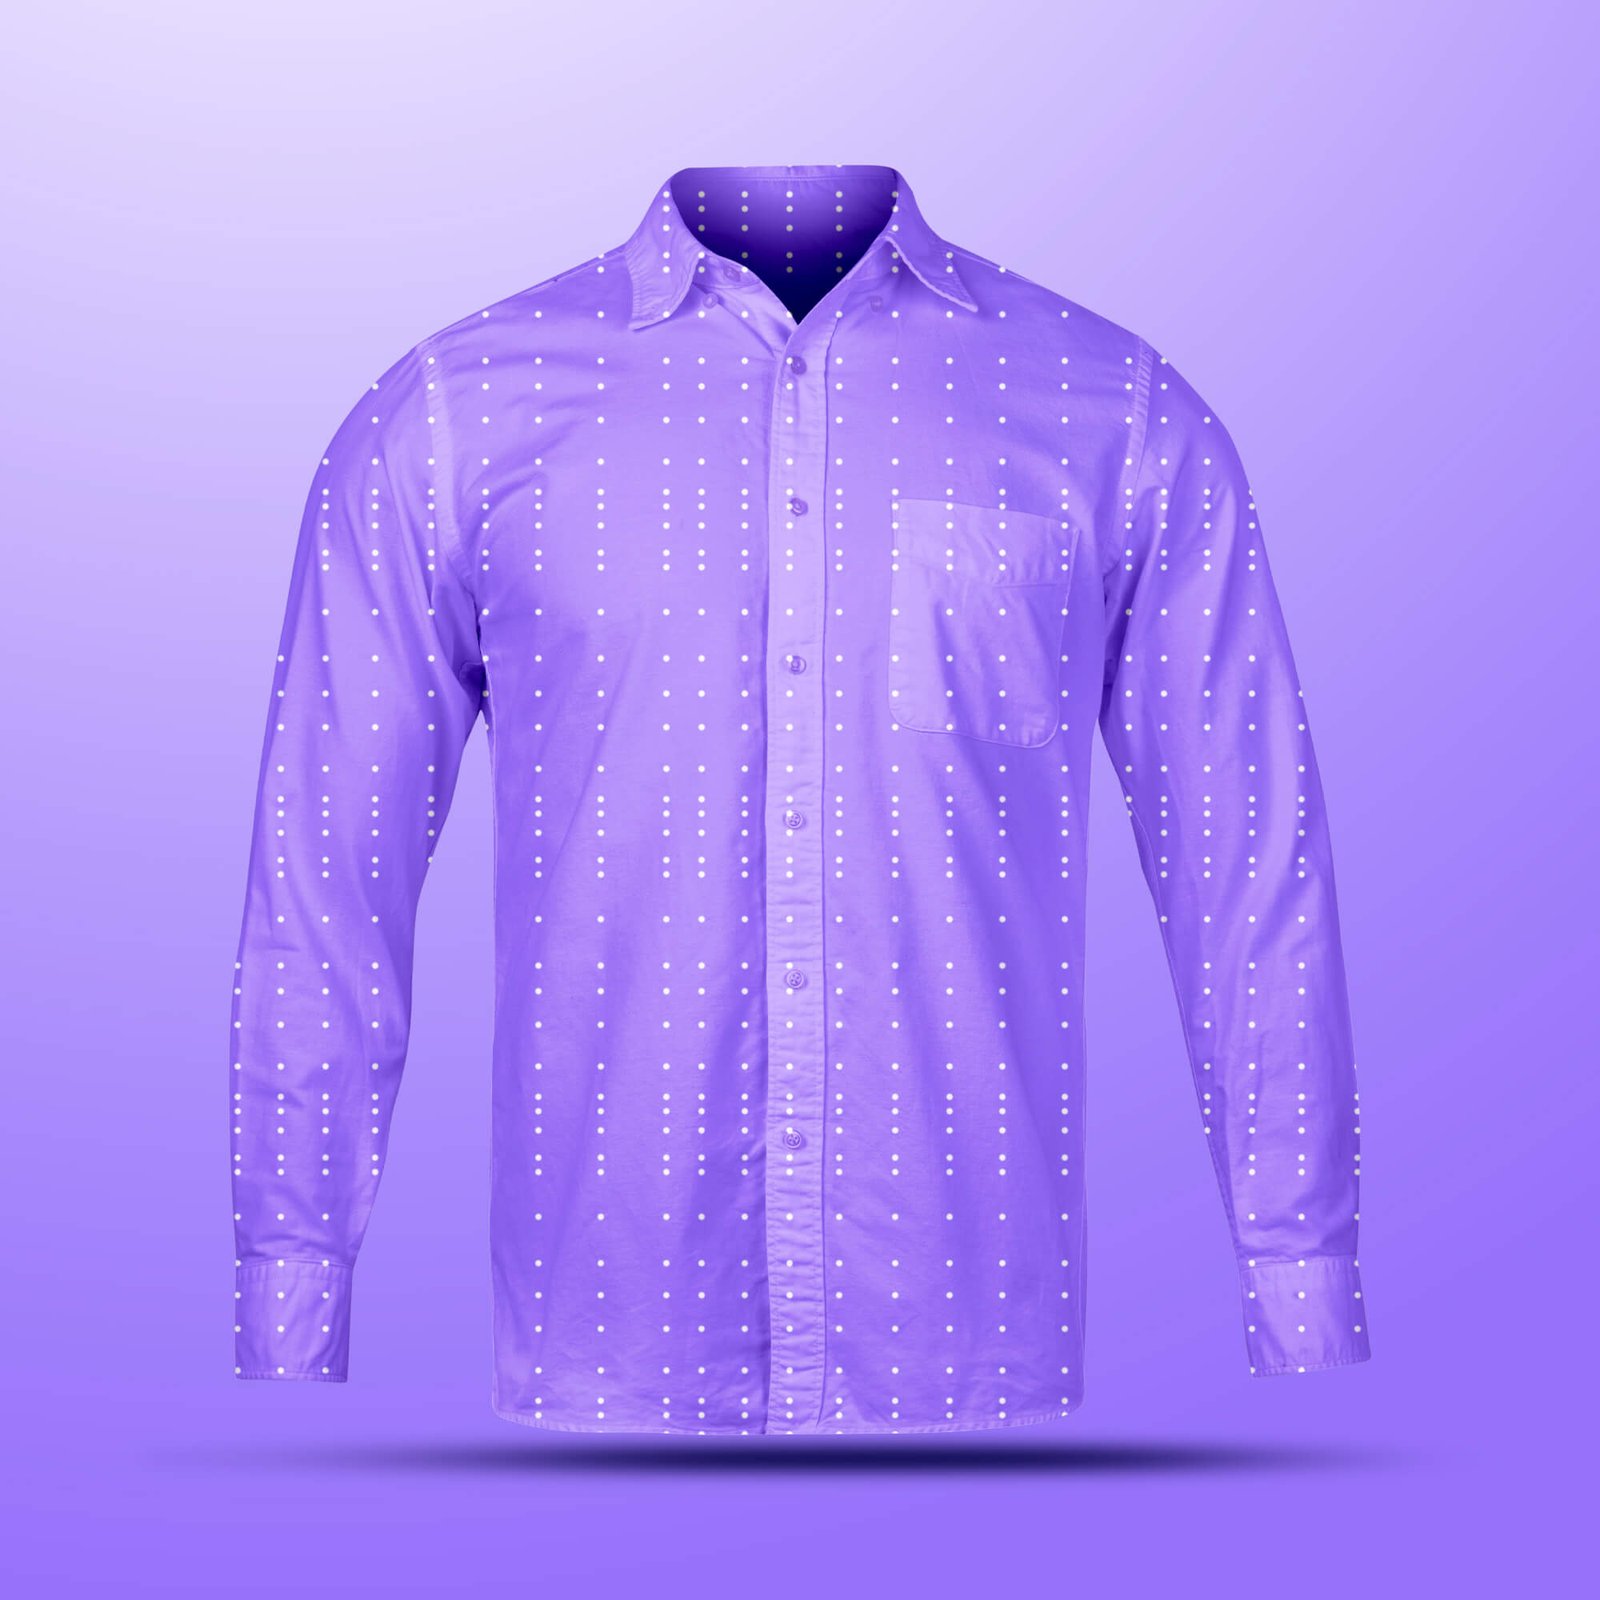 Design Free Formal Shirt Mockup PSD Template